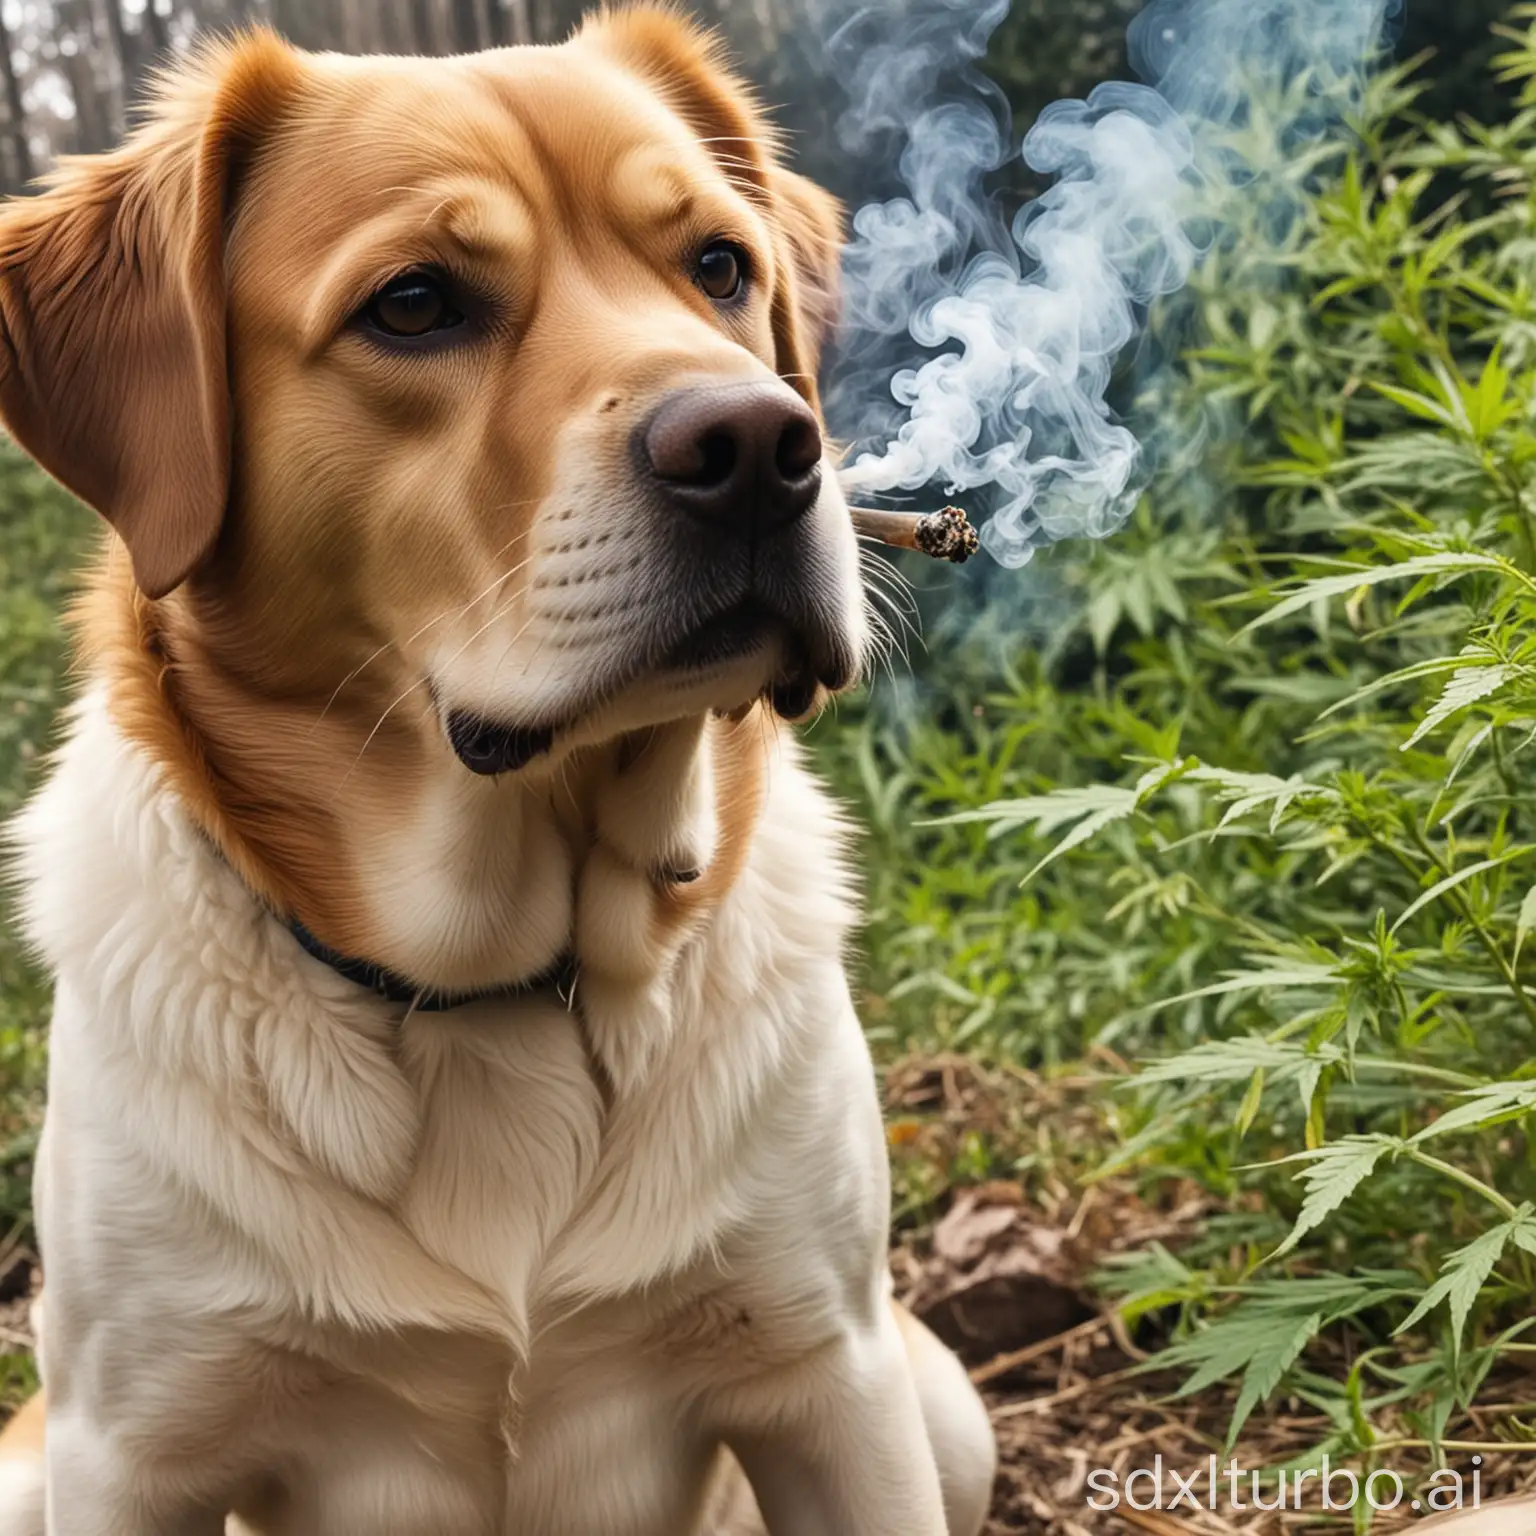 Dog smokes cannabis